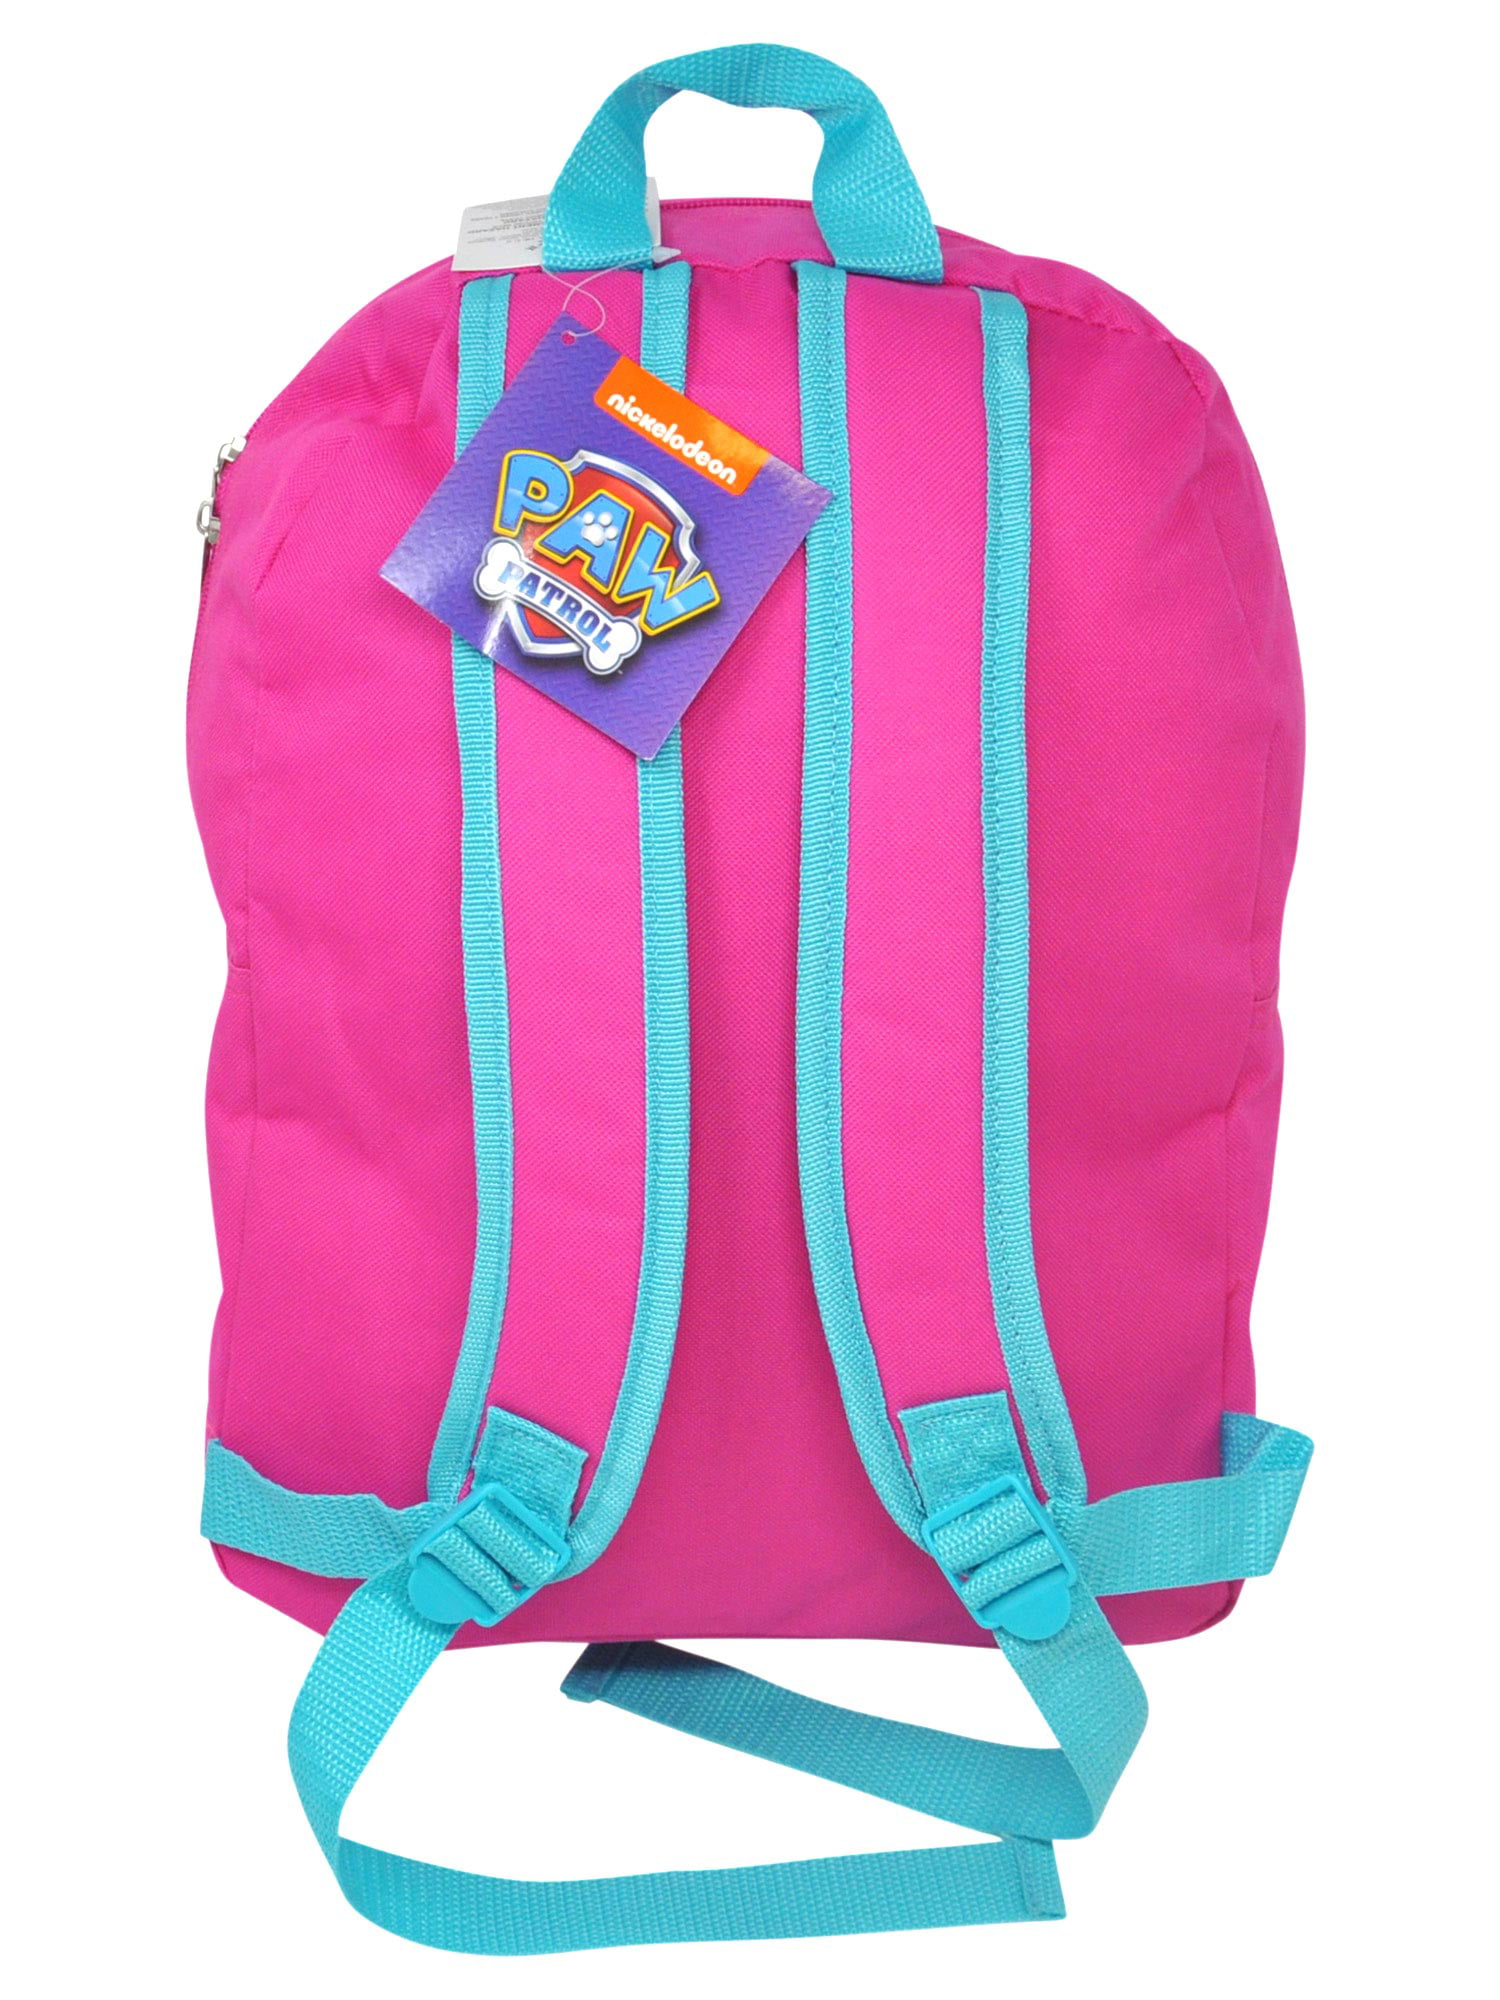 Nickelodeon Girl PAW Patrol Set 15 School Backpack & Insulated